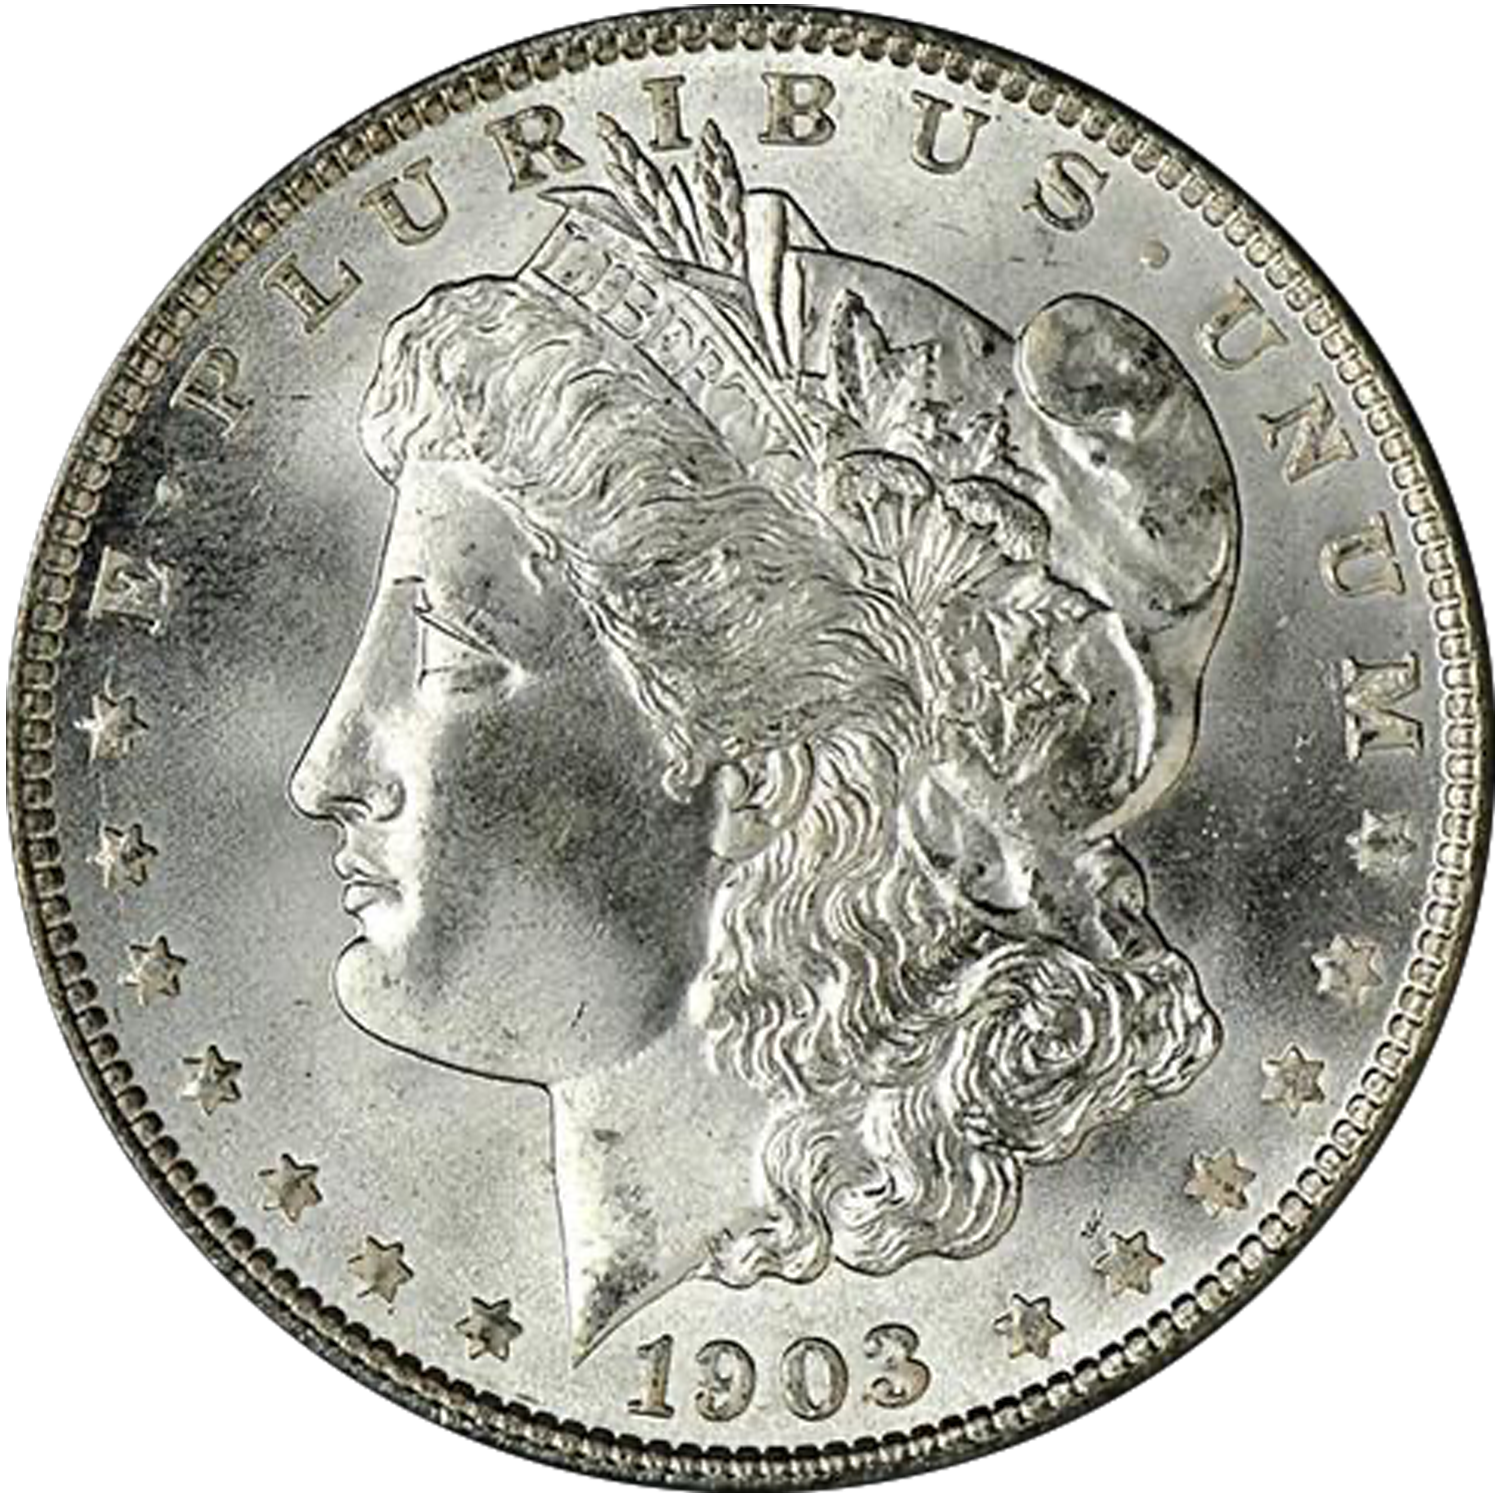 1903 new orleans mint proof morgan silver dollar value